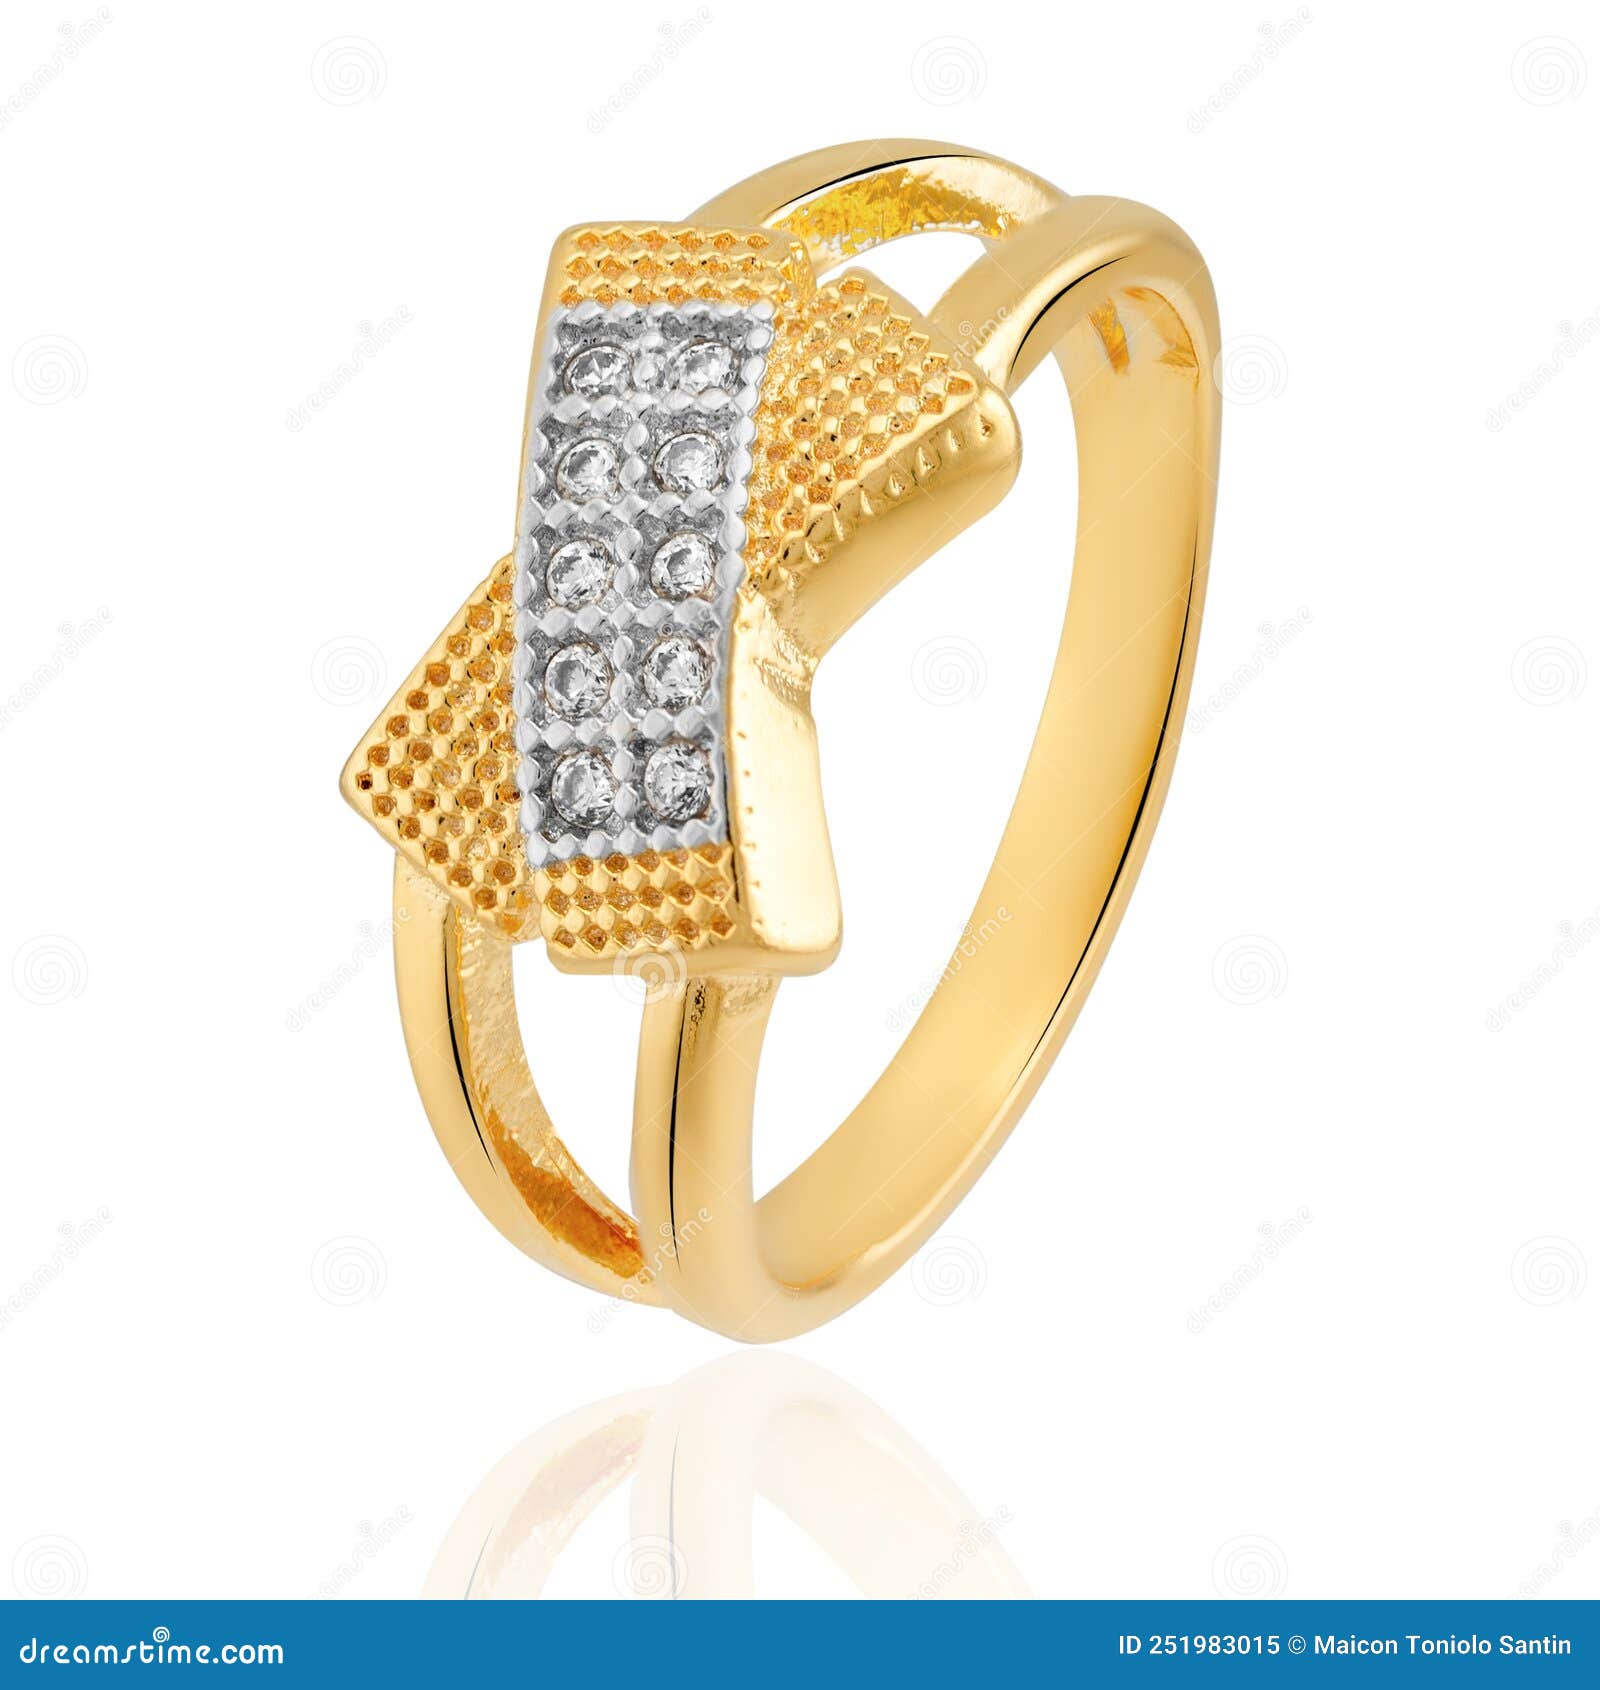 Buy 1200+ Designs Online | BlueStone.com - India's #1 Online Jewellery Brand